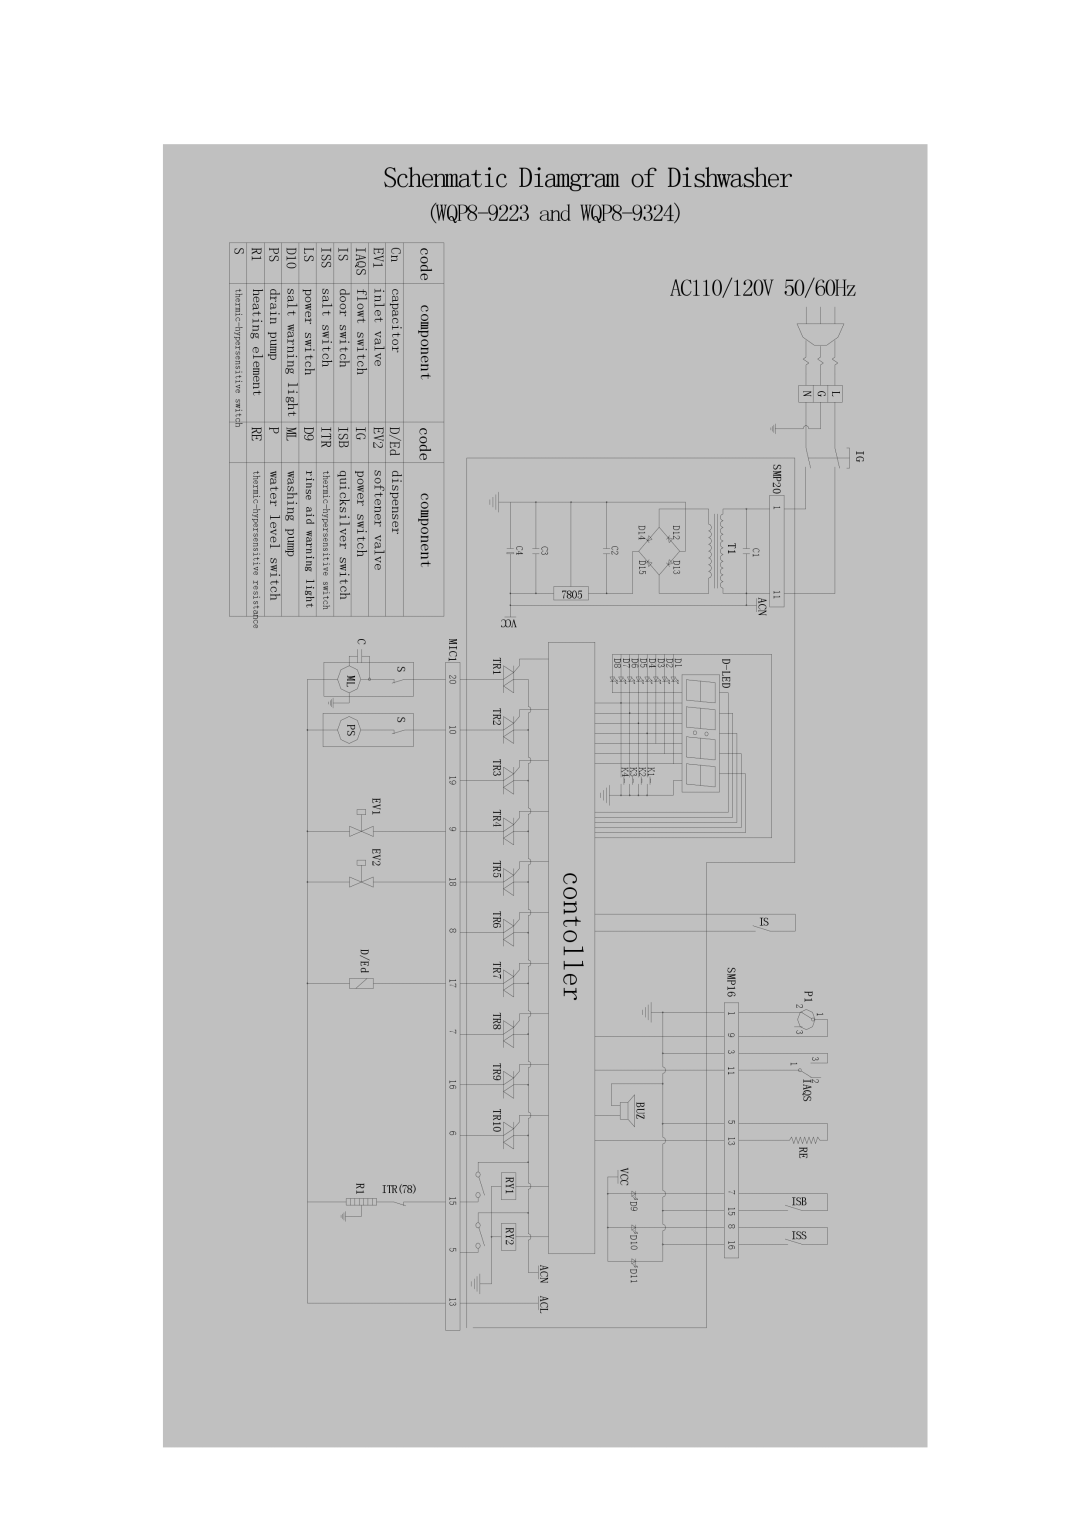 Equator WB 818, SB 818 service manual Schenmatic Diamgram of Dishwasher, WQP8-9223and WQP8-9324, AC110/120V 50/60Hz, lel r 